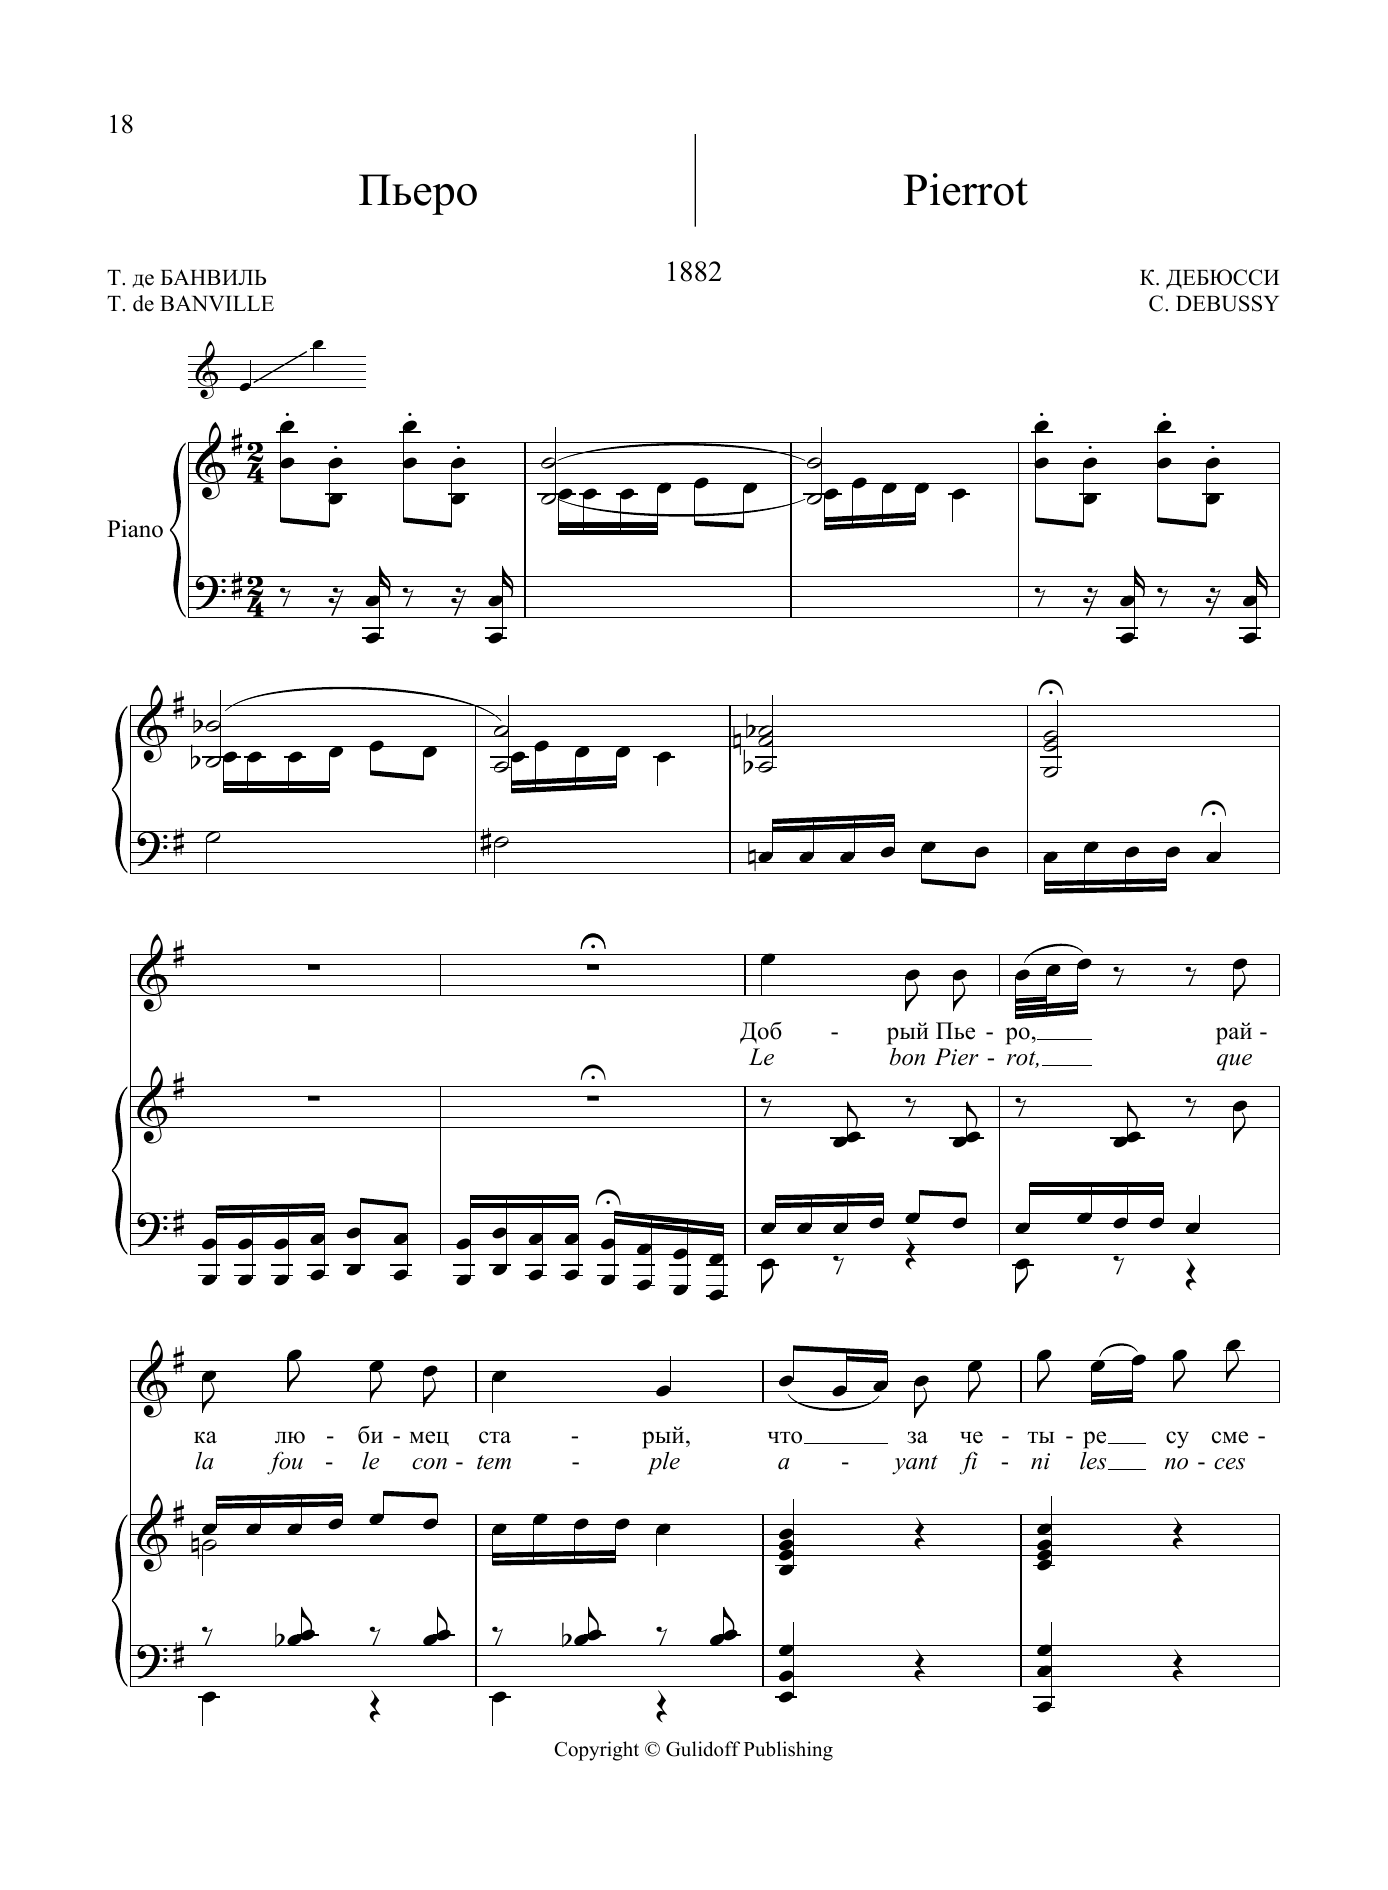 Download Claude Debussy 20 Songs Vol. 1: Pierrot Sheet Music